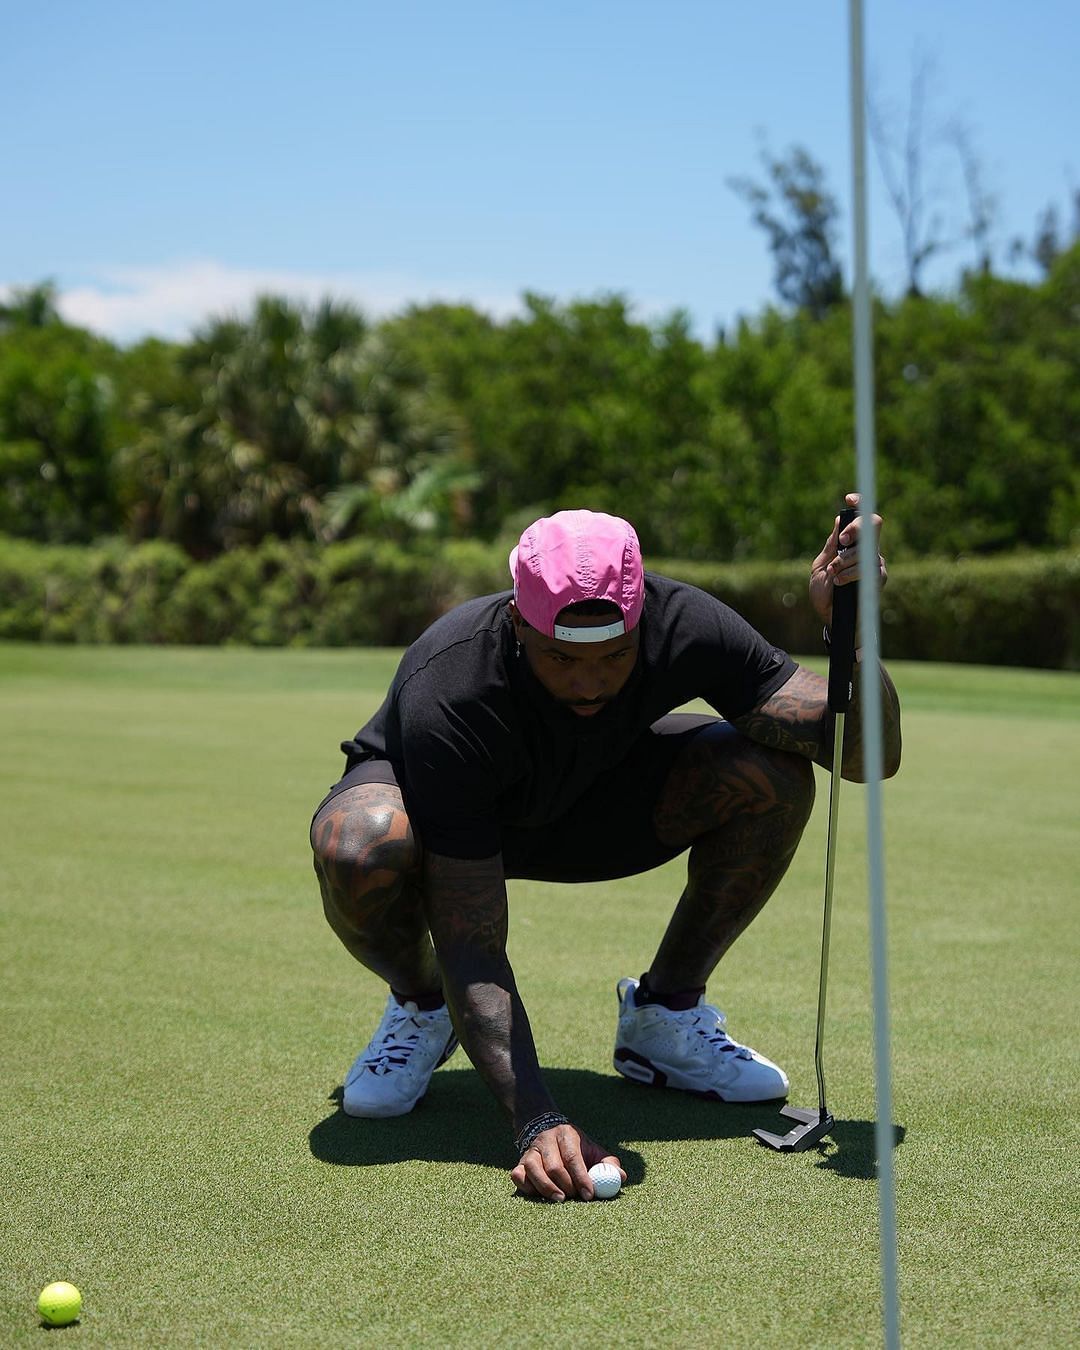 Beckham Jr. lining up his putt. Photo via DJ Khaled Instagram.